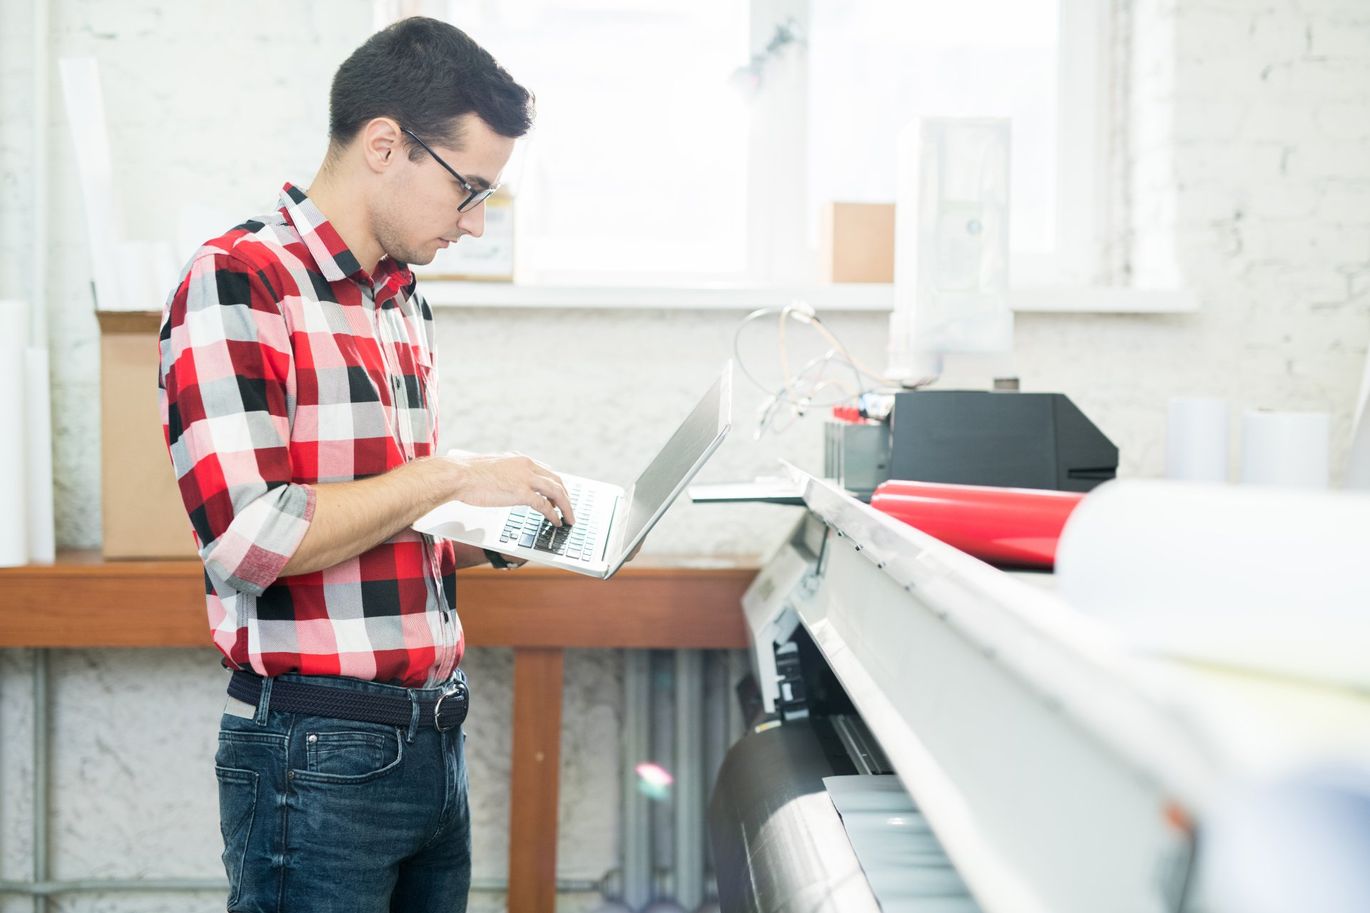 a man using a computer next to a large printer